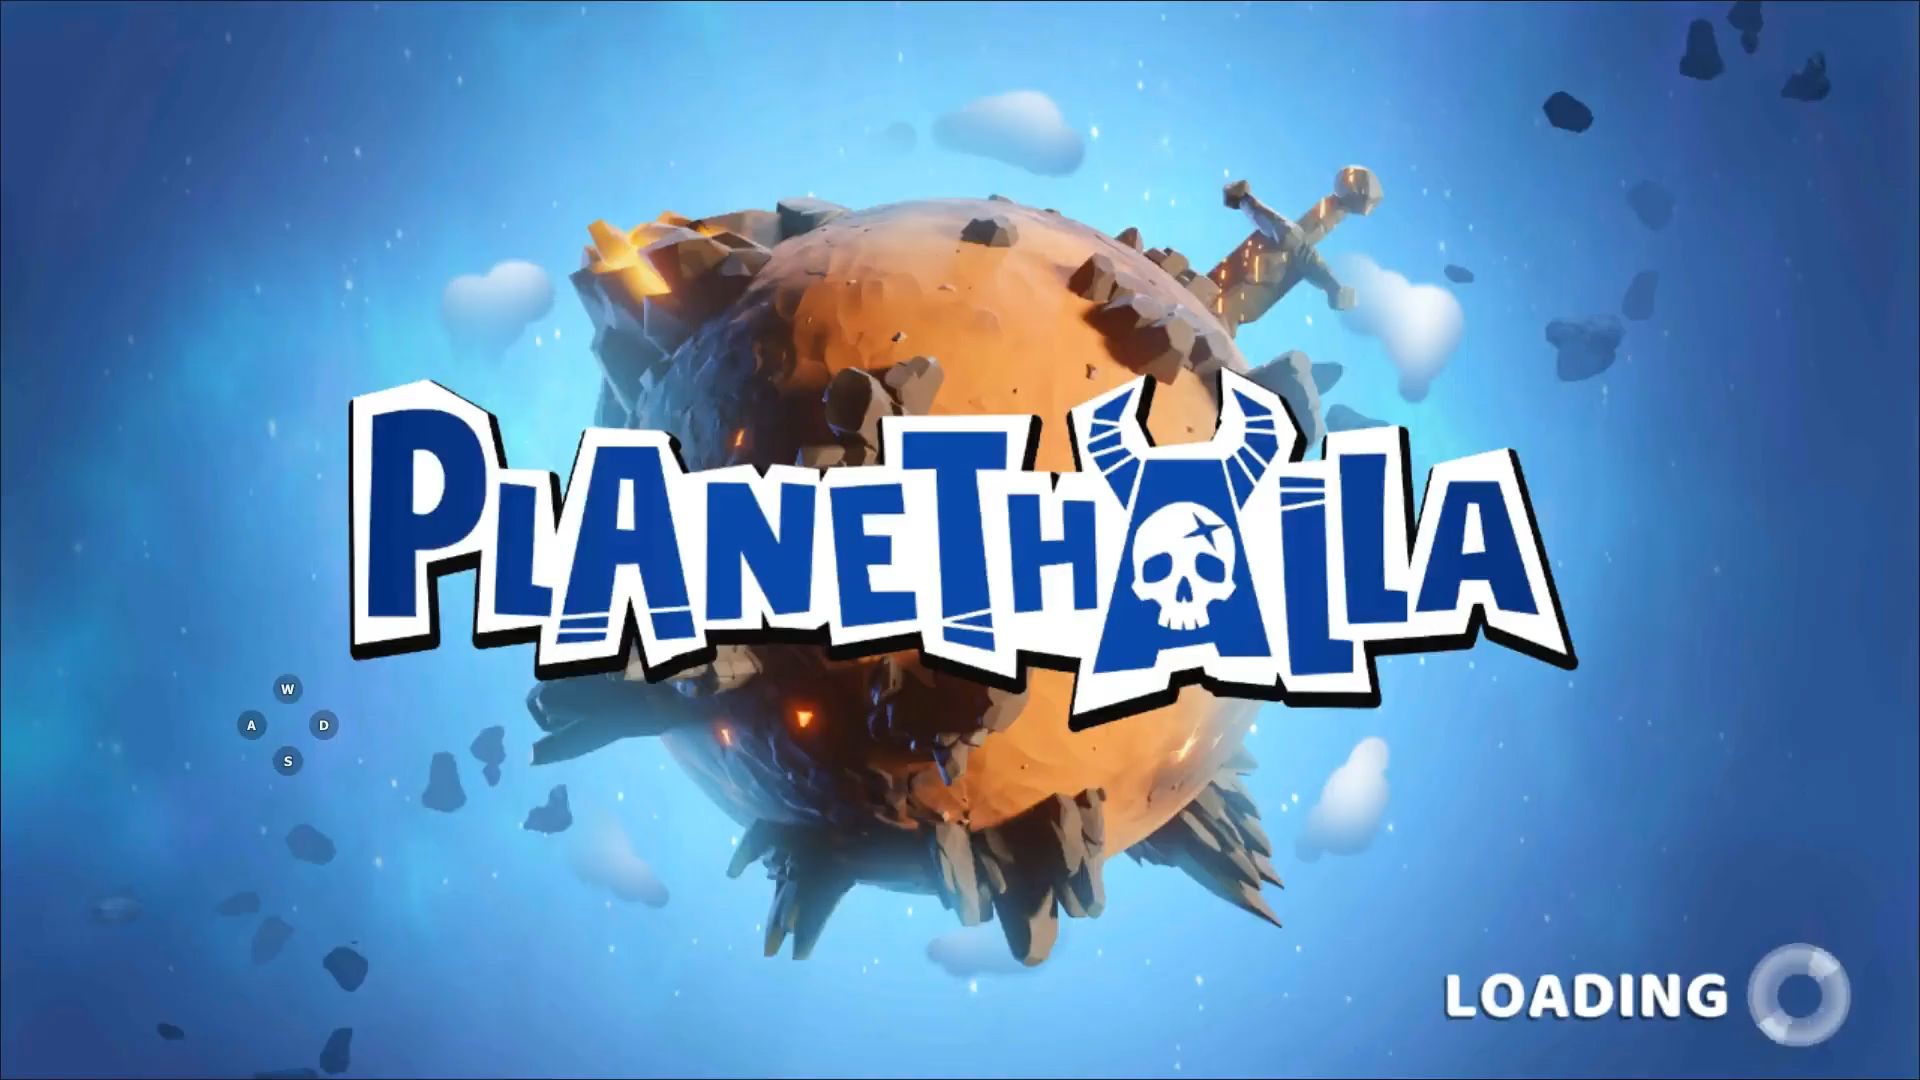 Download Planethalla für Android kostenlos.